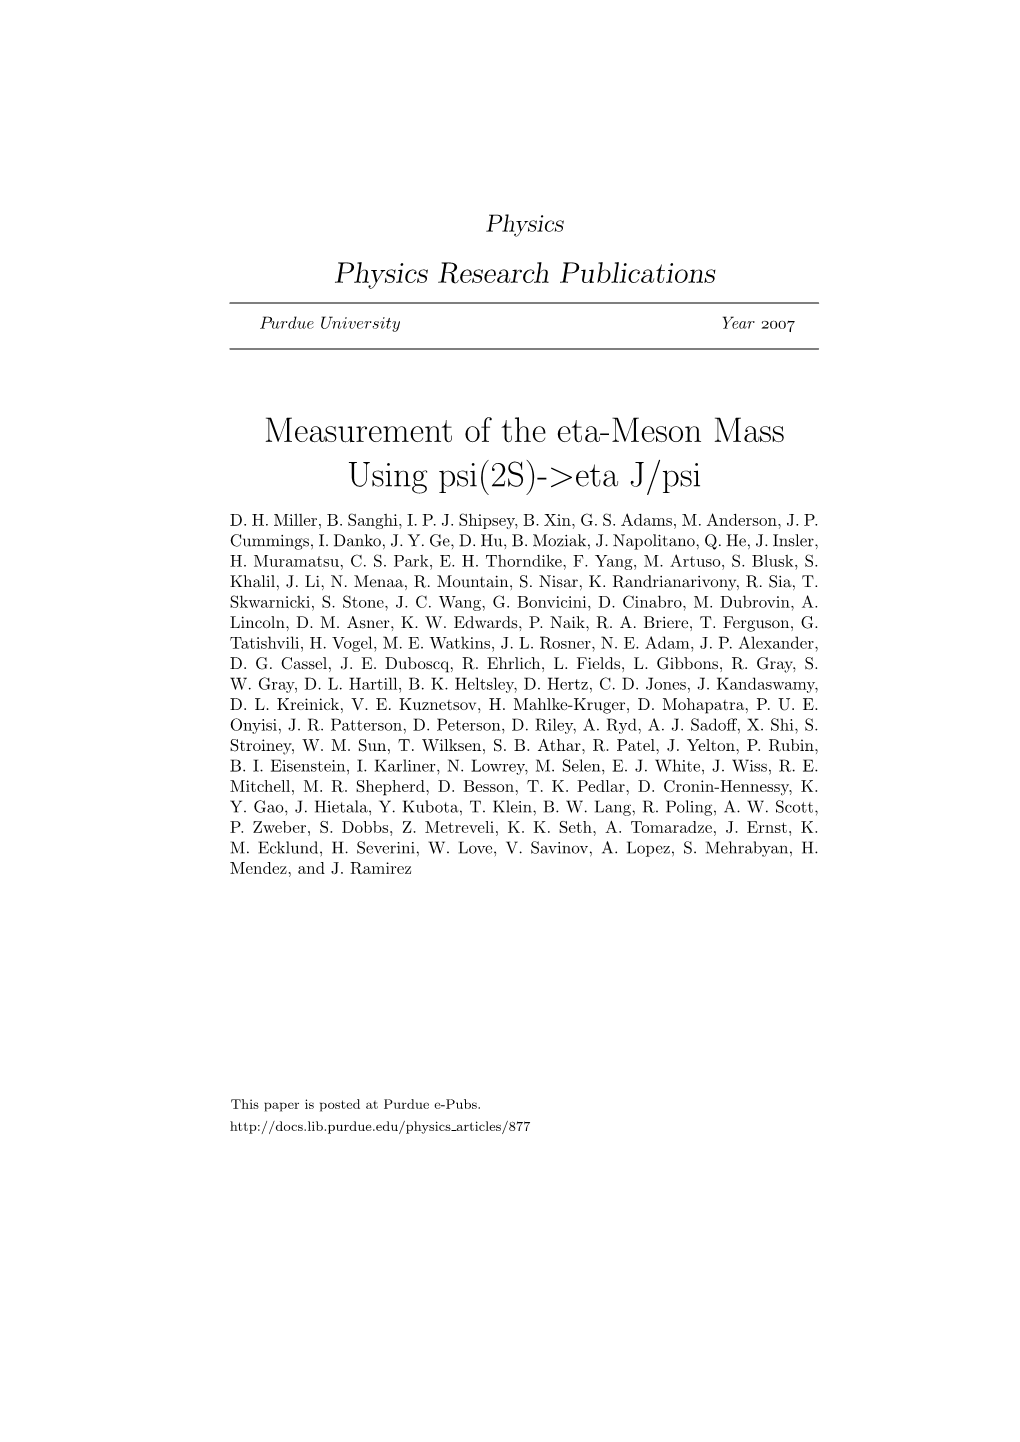 Measurement of the Eta-Meson Mass Using Psi(2S)->Eta J/Psi